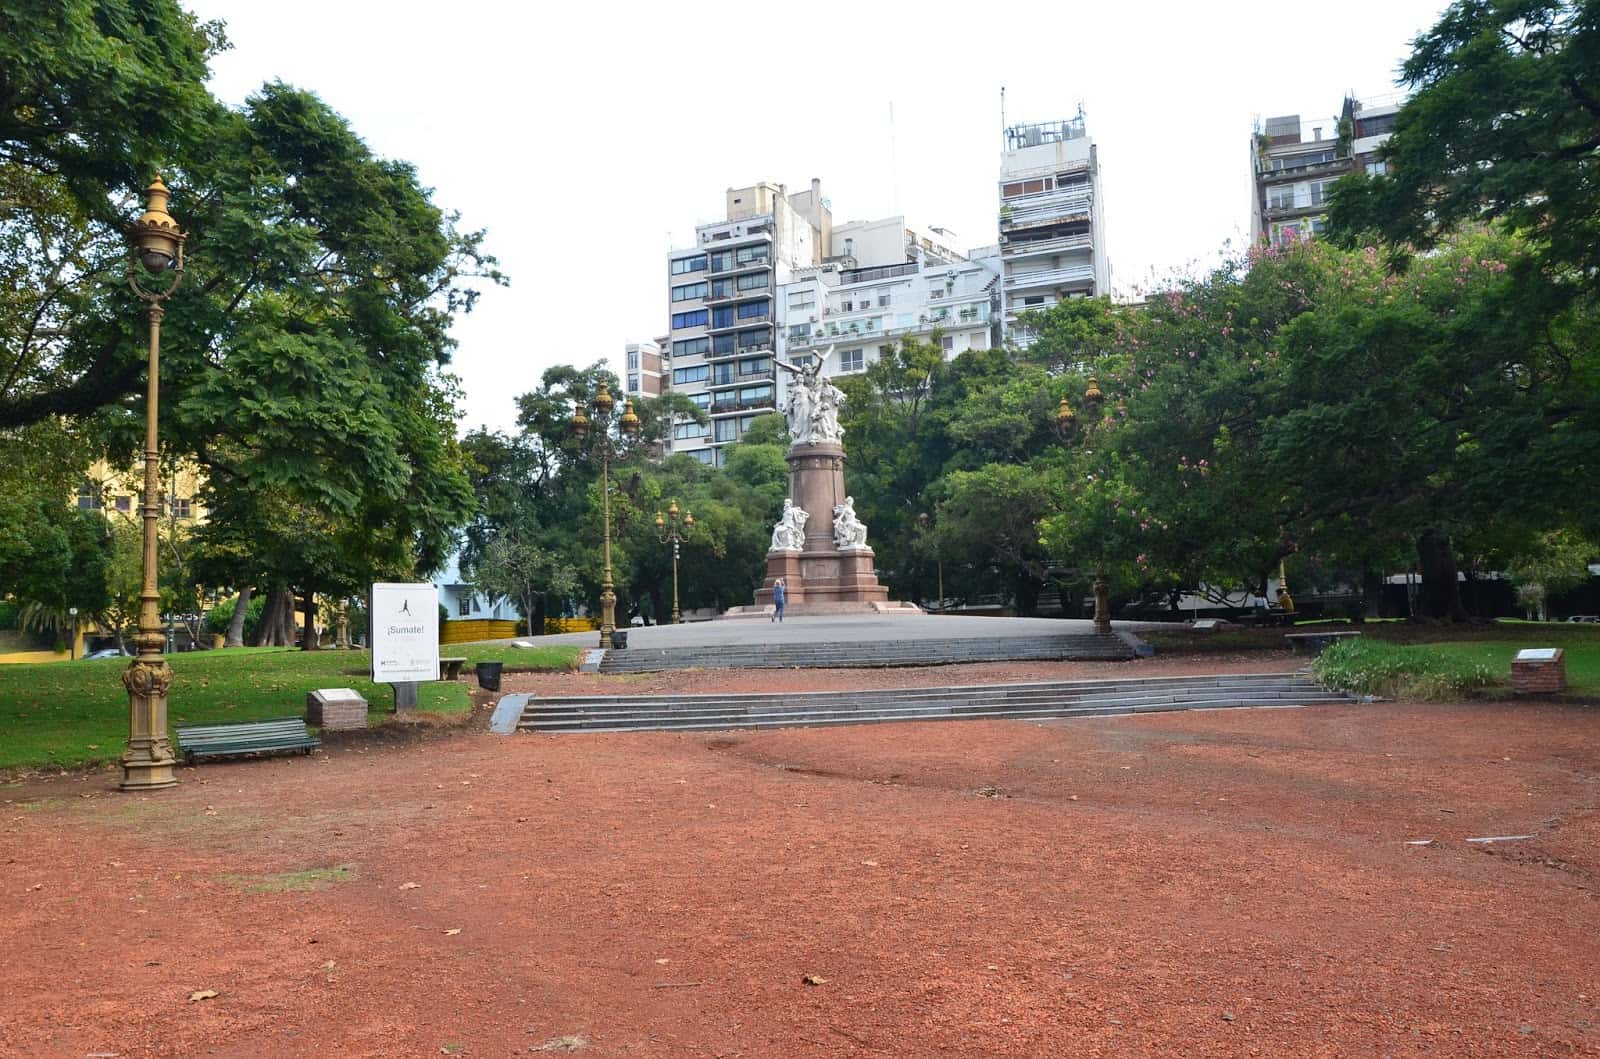 Plaza Francia in Recoleta, Buenos Aires, Argentina